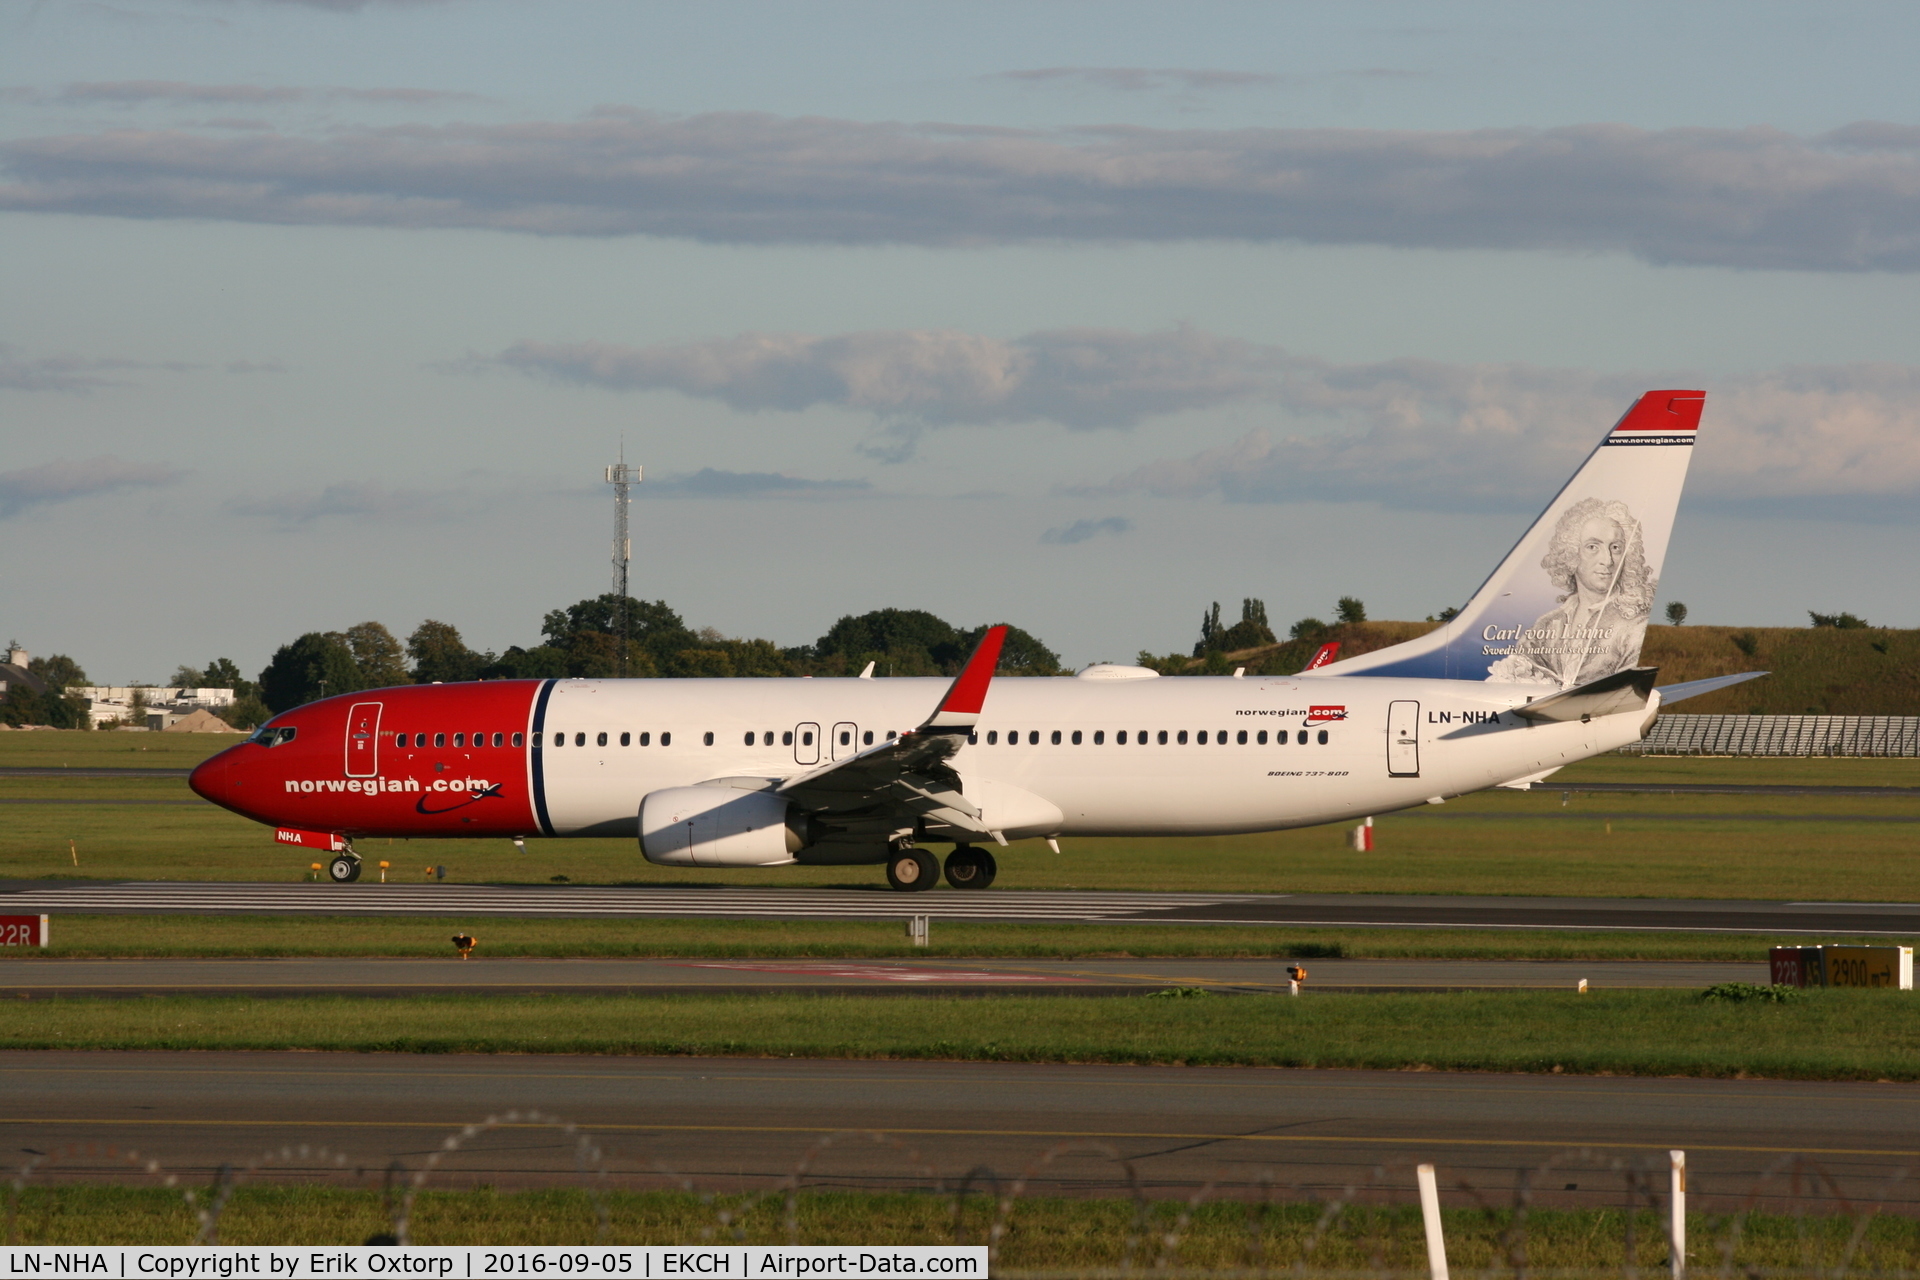 LN-NHA, 2014 Boeing 737-8JP C/N 41129, LN-NHA just arrived rw 04L